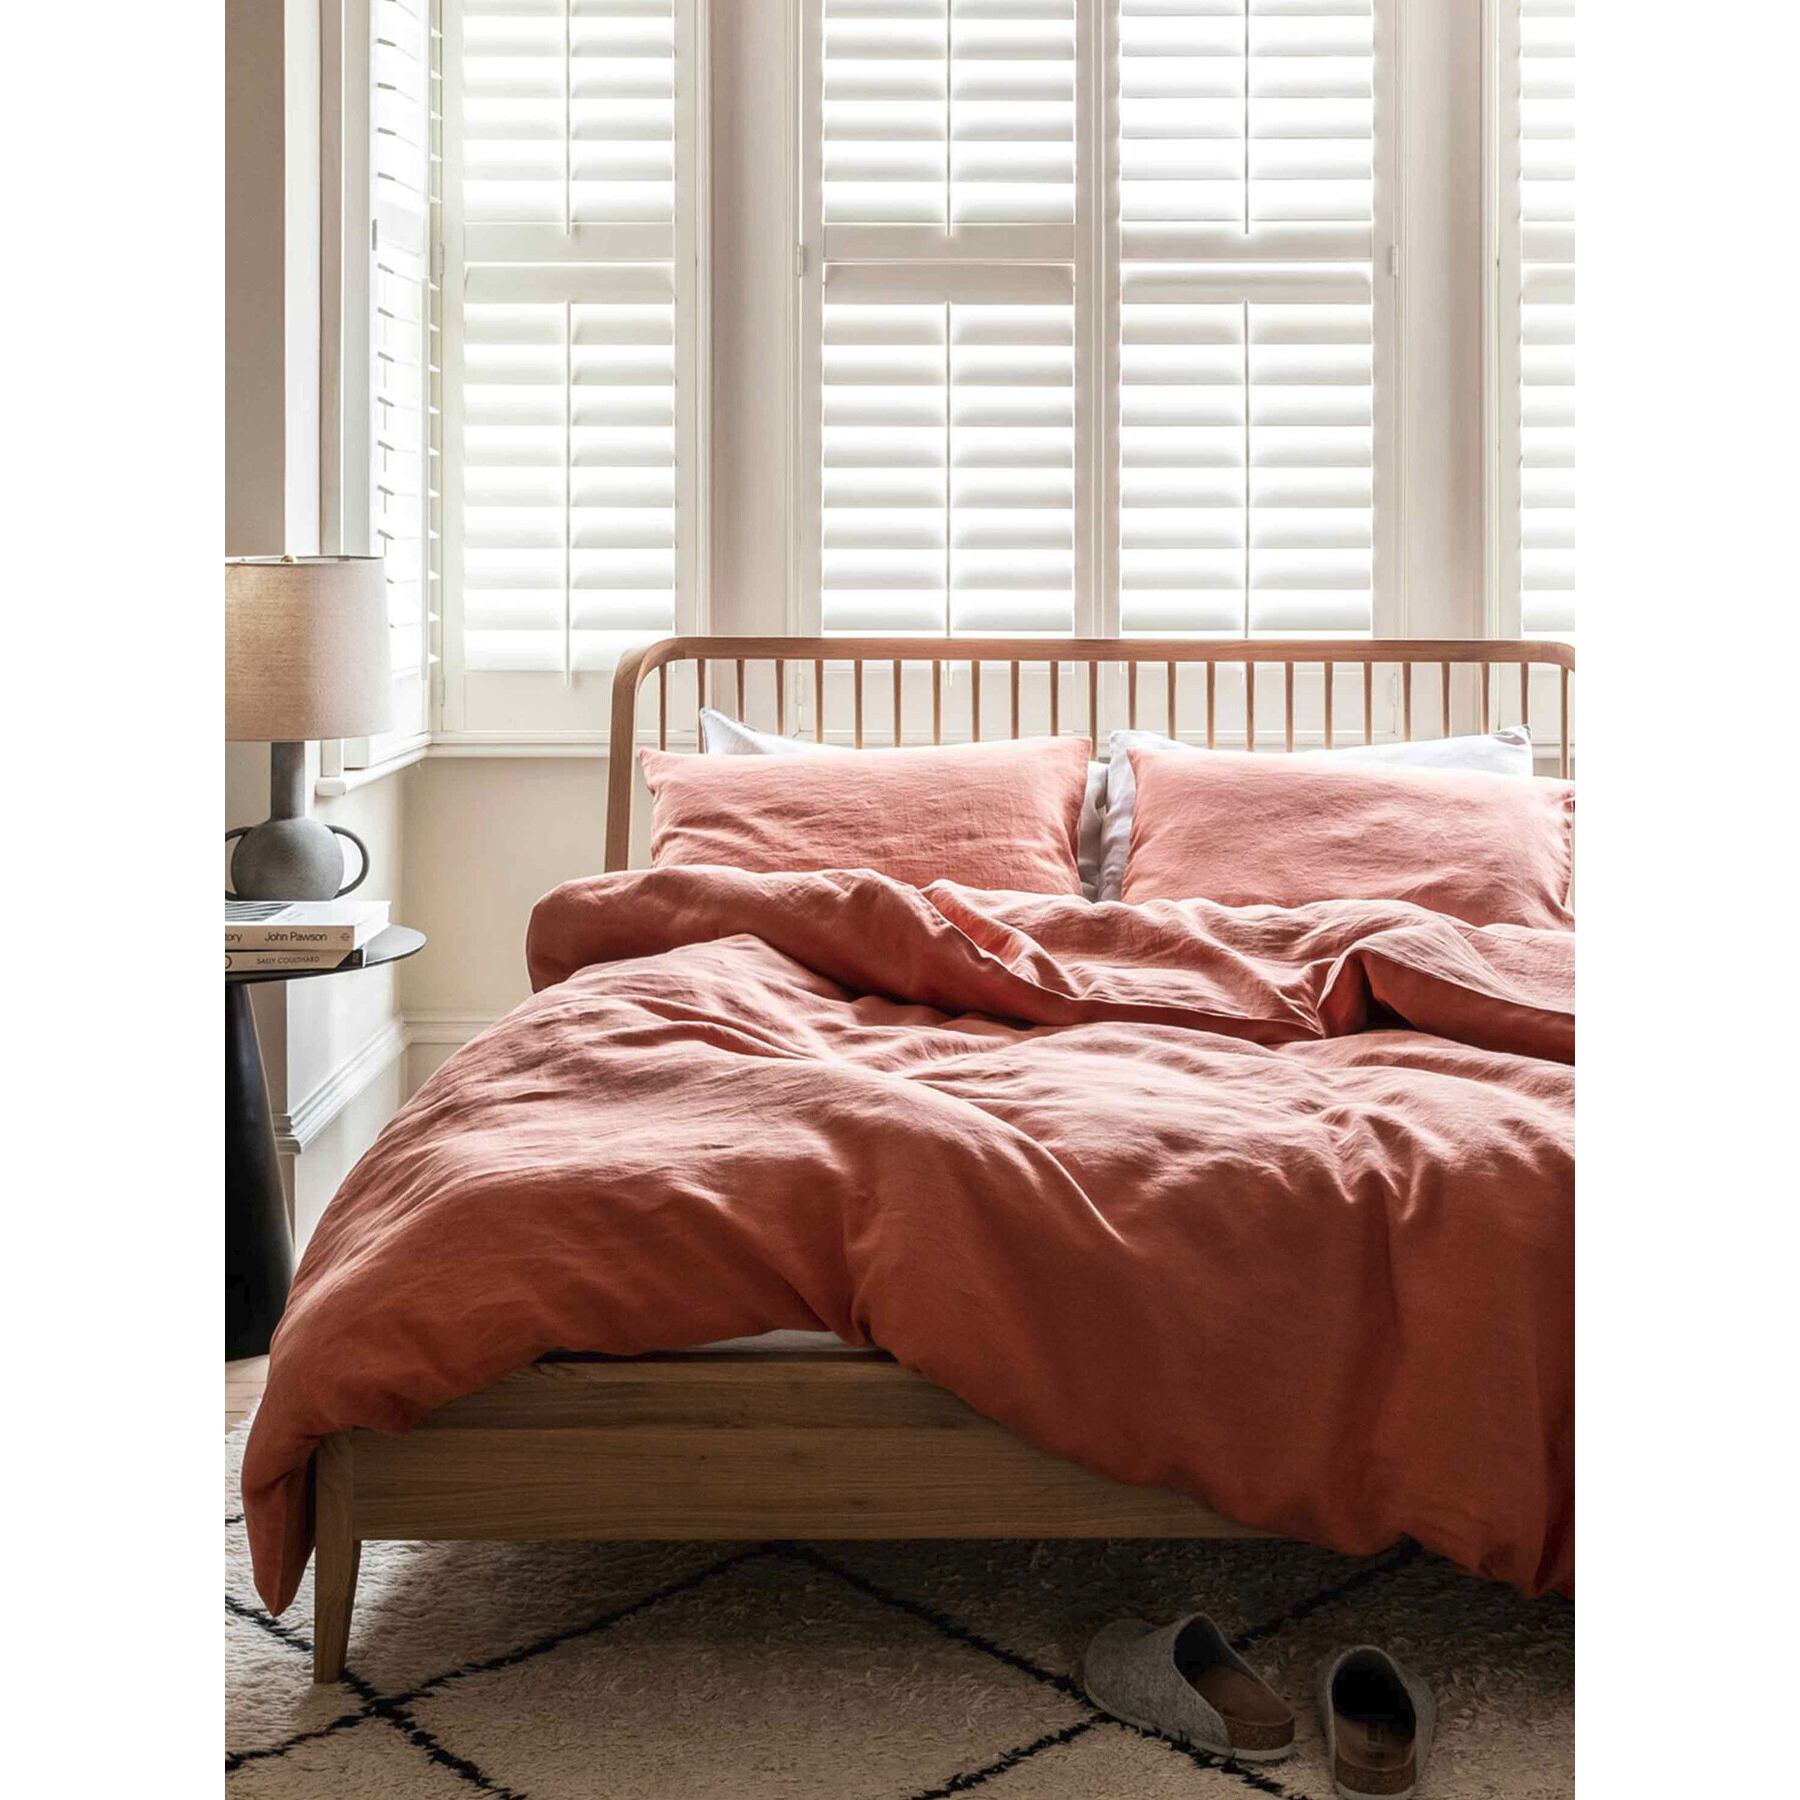 Piglet in Bed Linen Fitted Sheet - Size King Orange - image 1